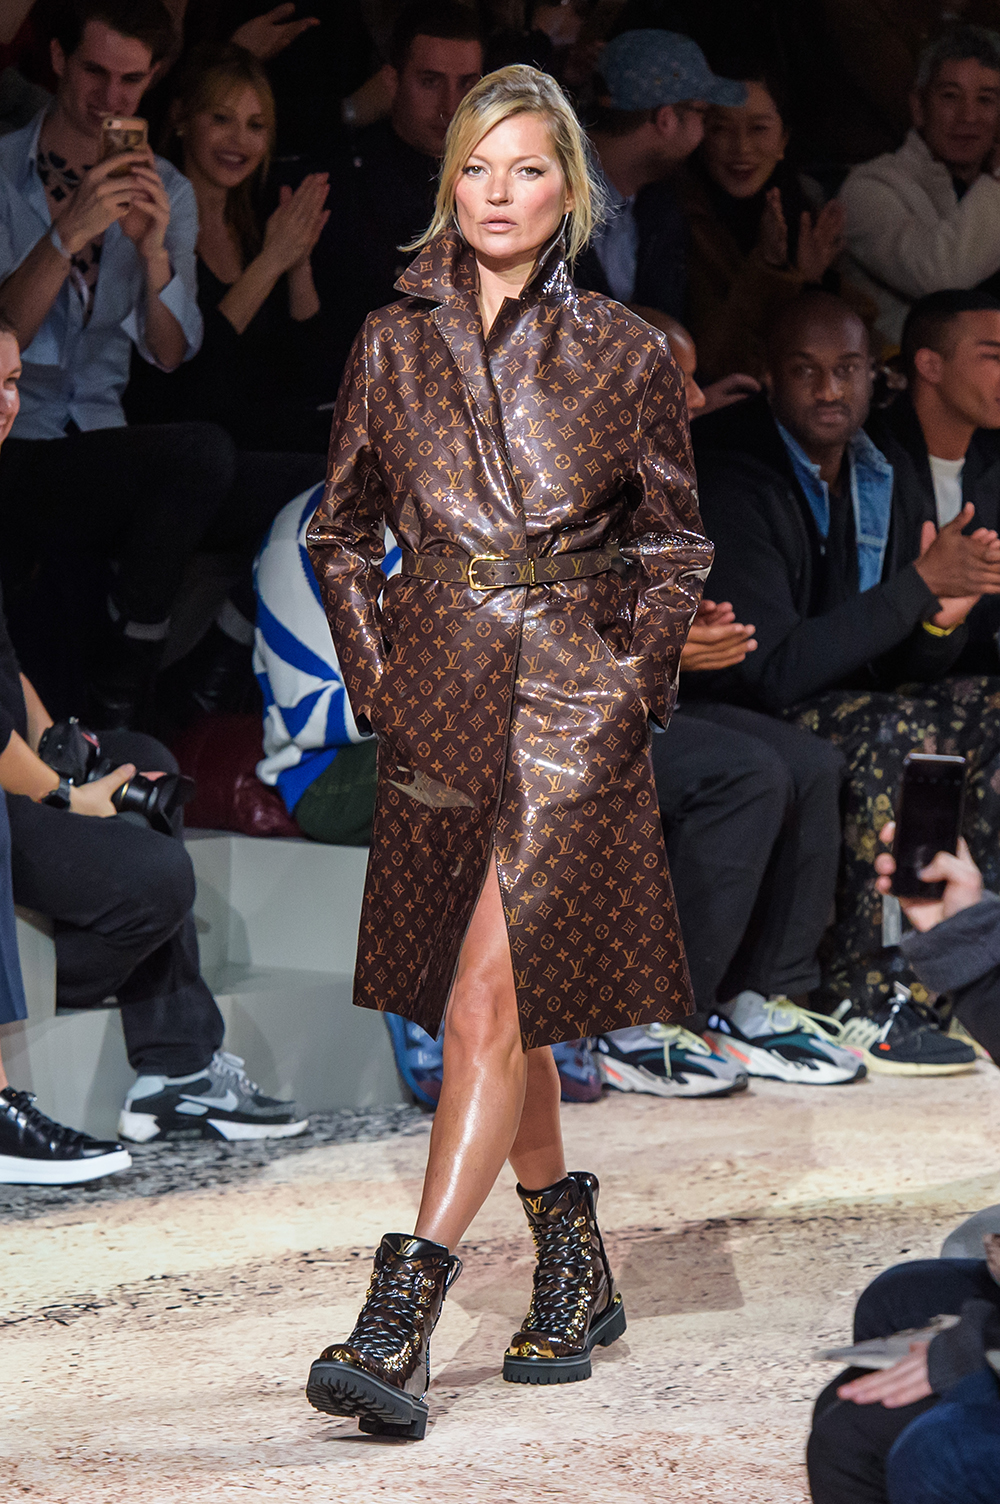 Naomi Campbell, Kate Moss Model in Louis Vuitton Menswear Runway Show